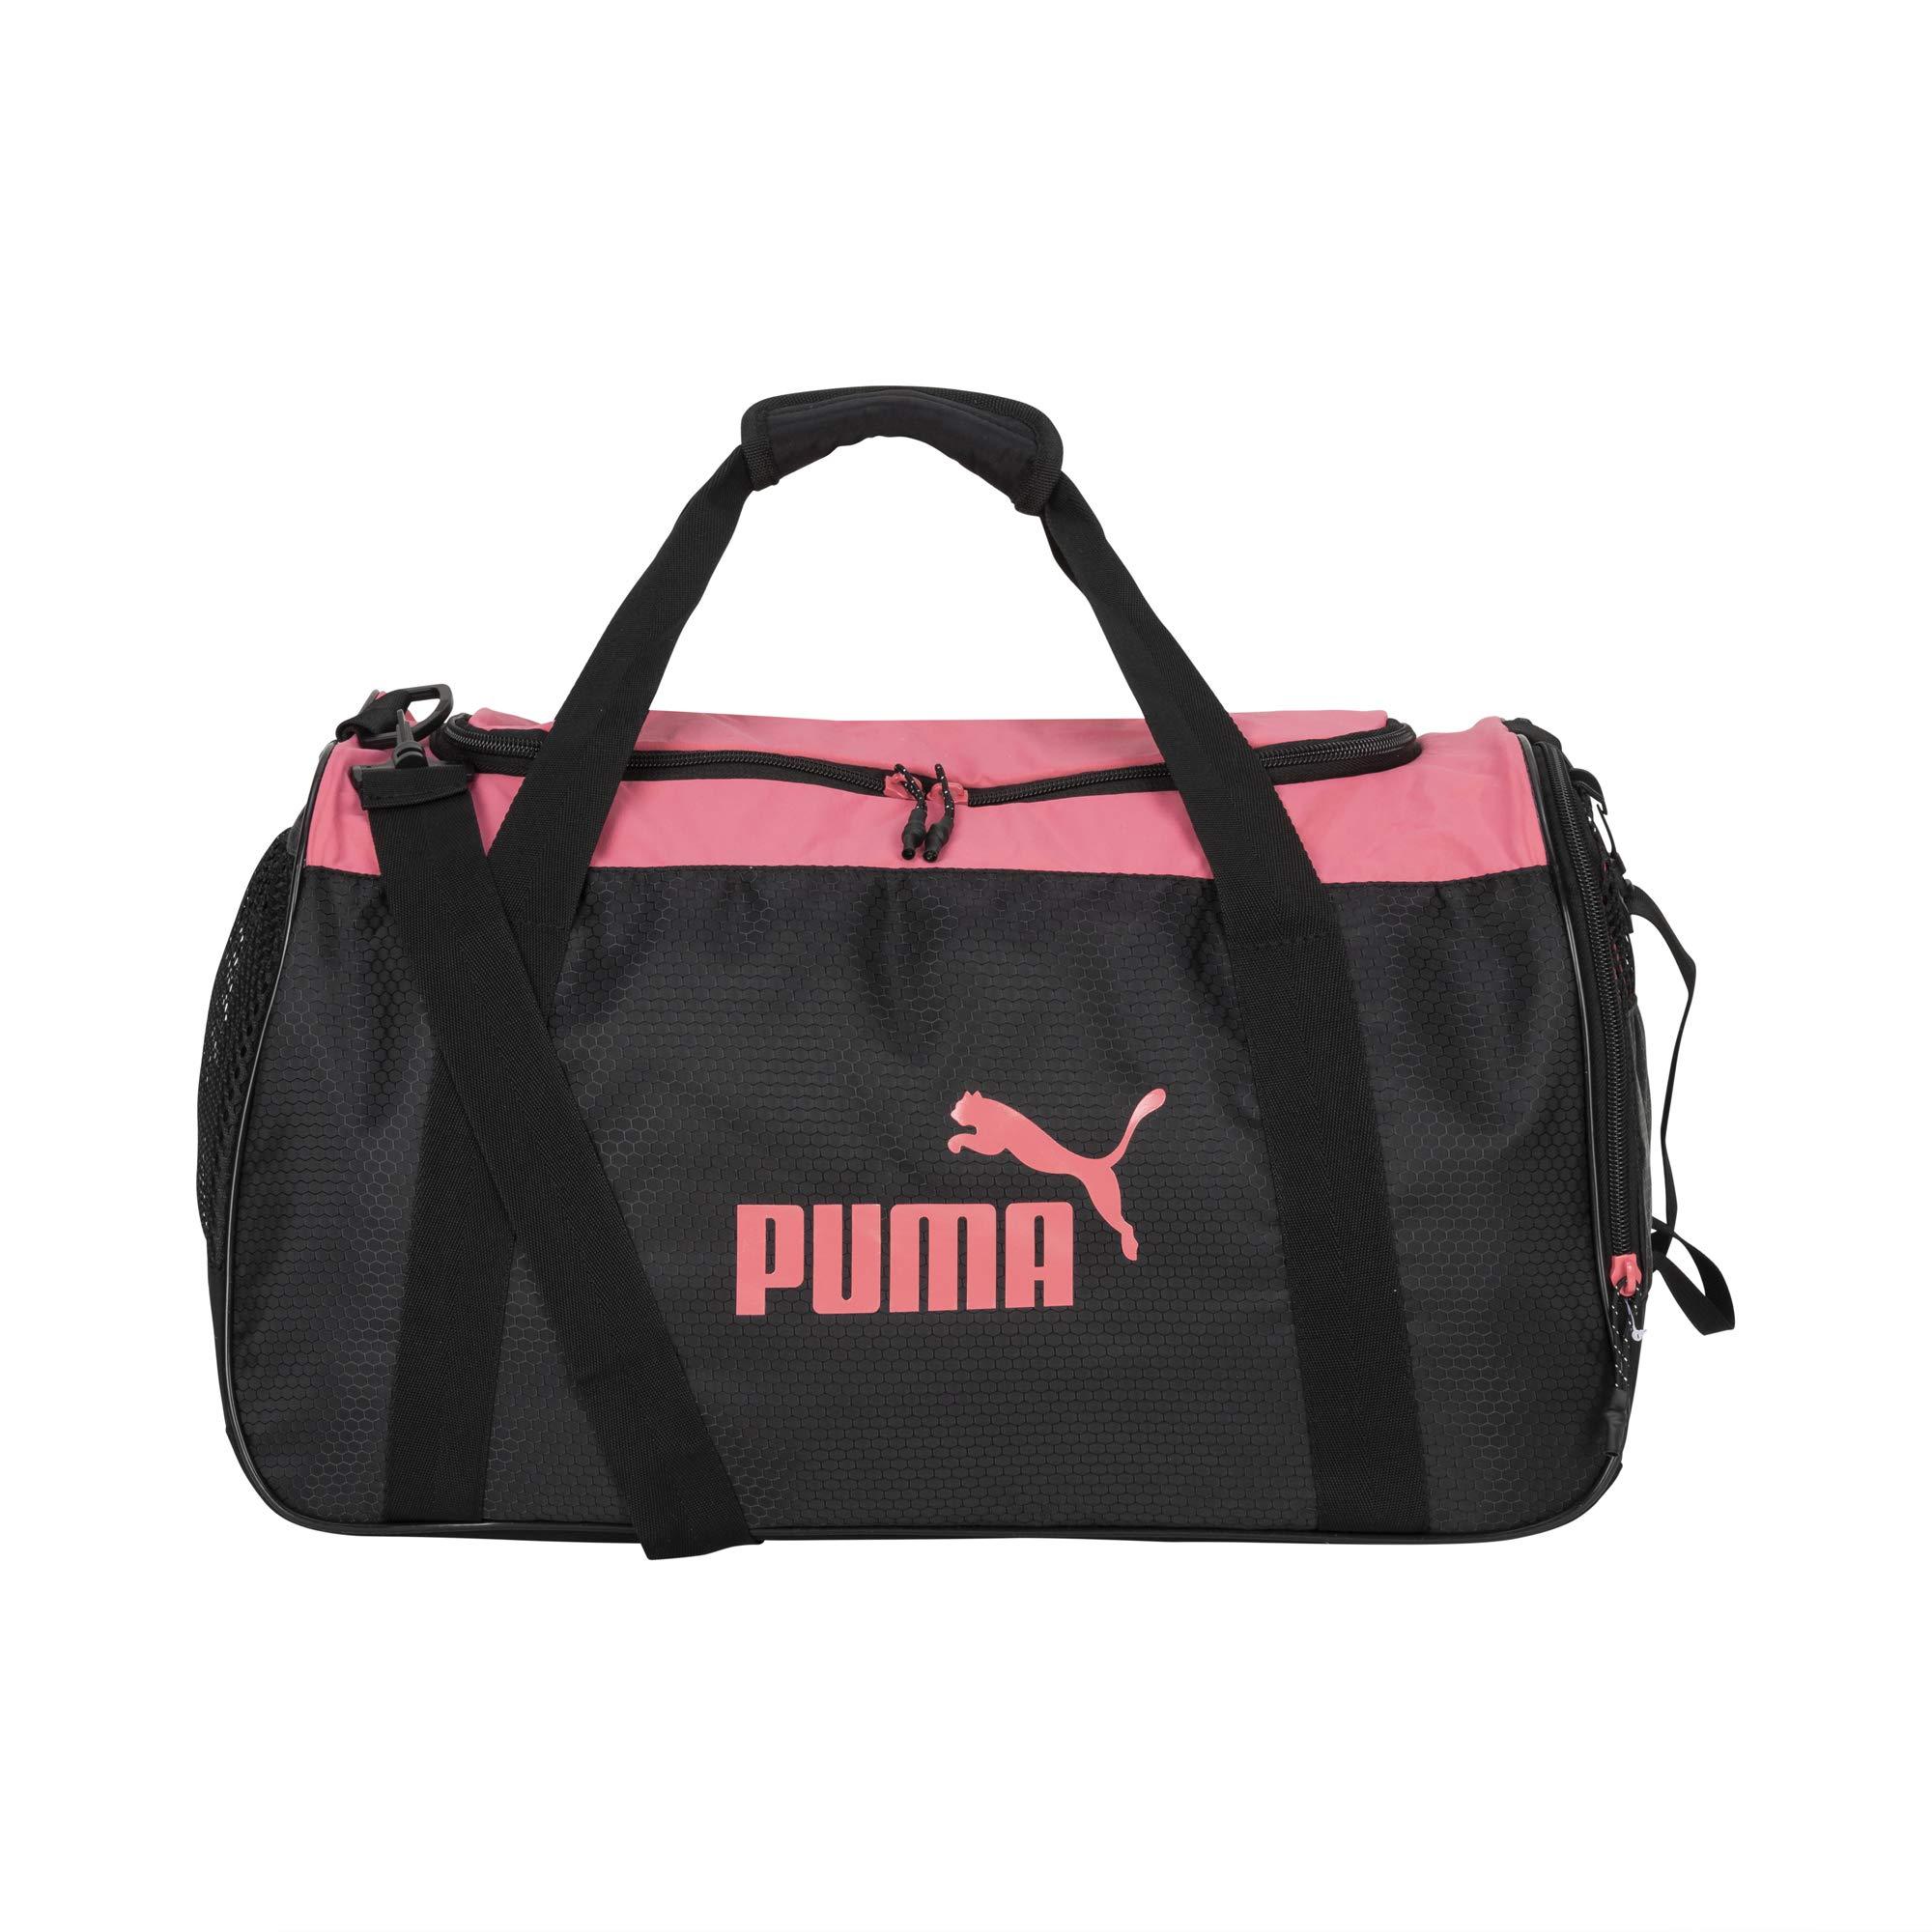 PUMA Defense Duffel Bag in Black Combo (Black) - Save 4% - Lyst